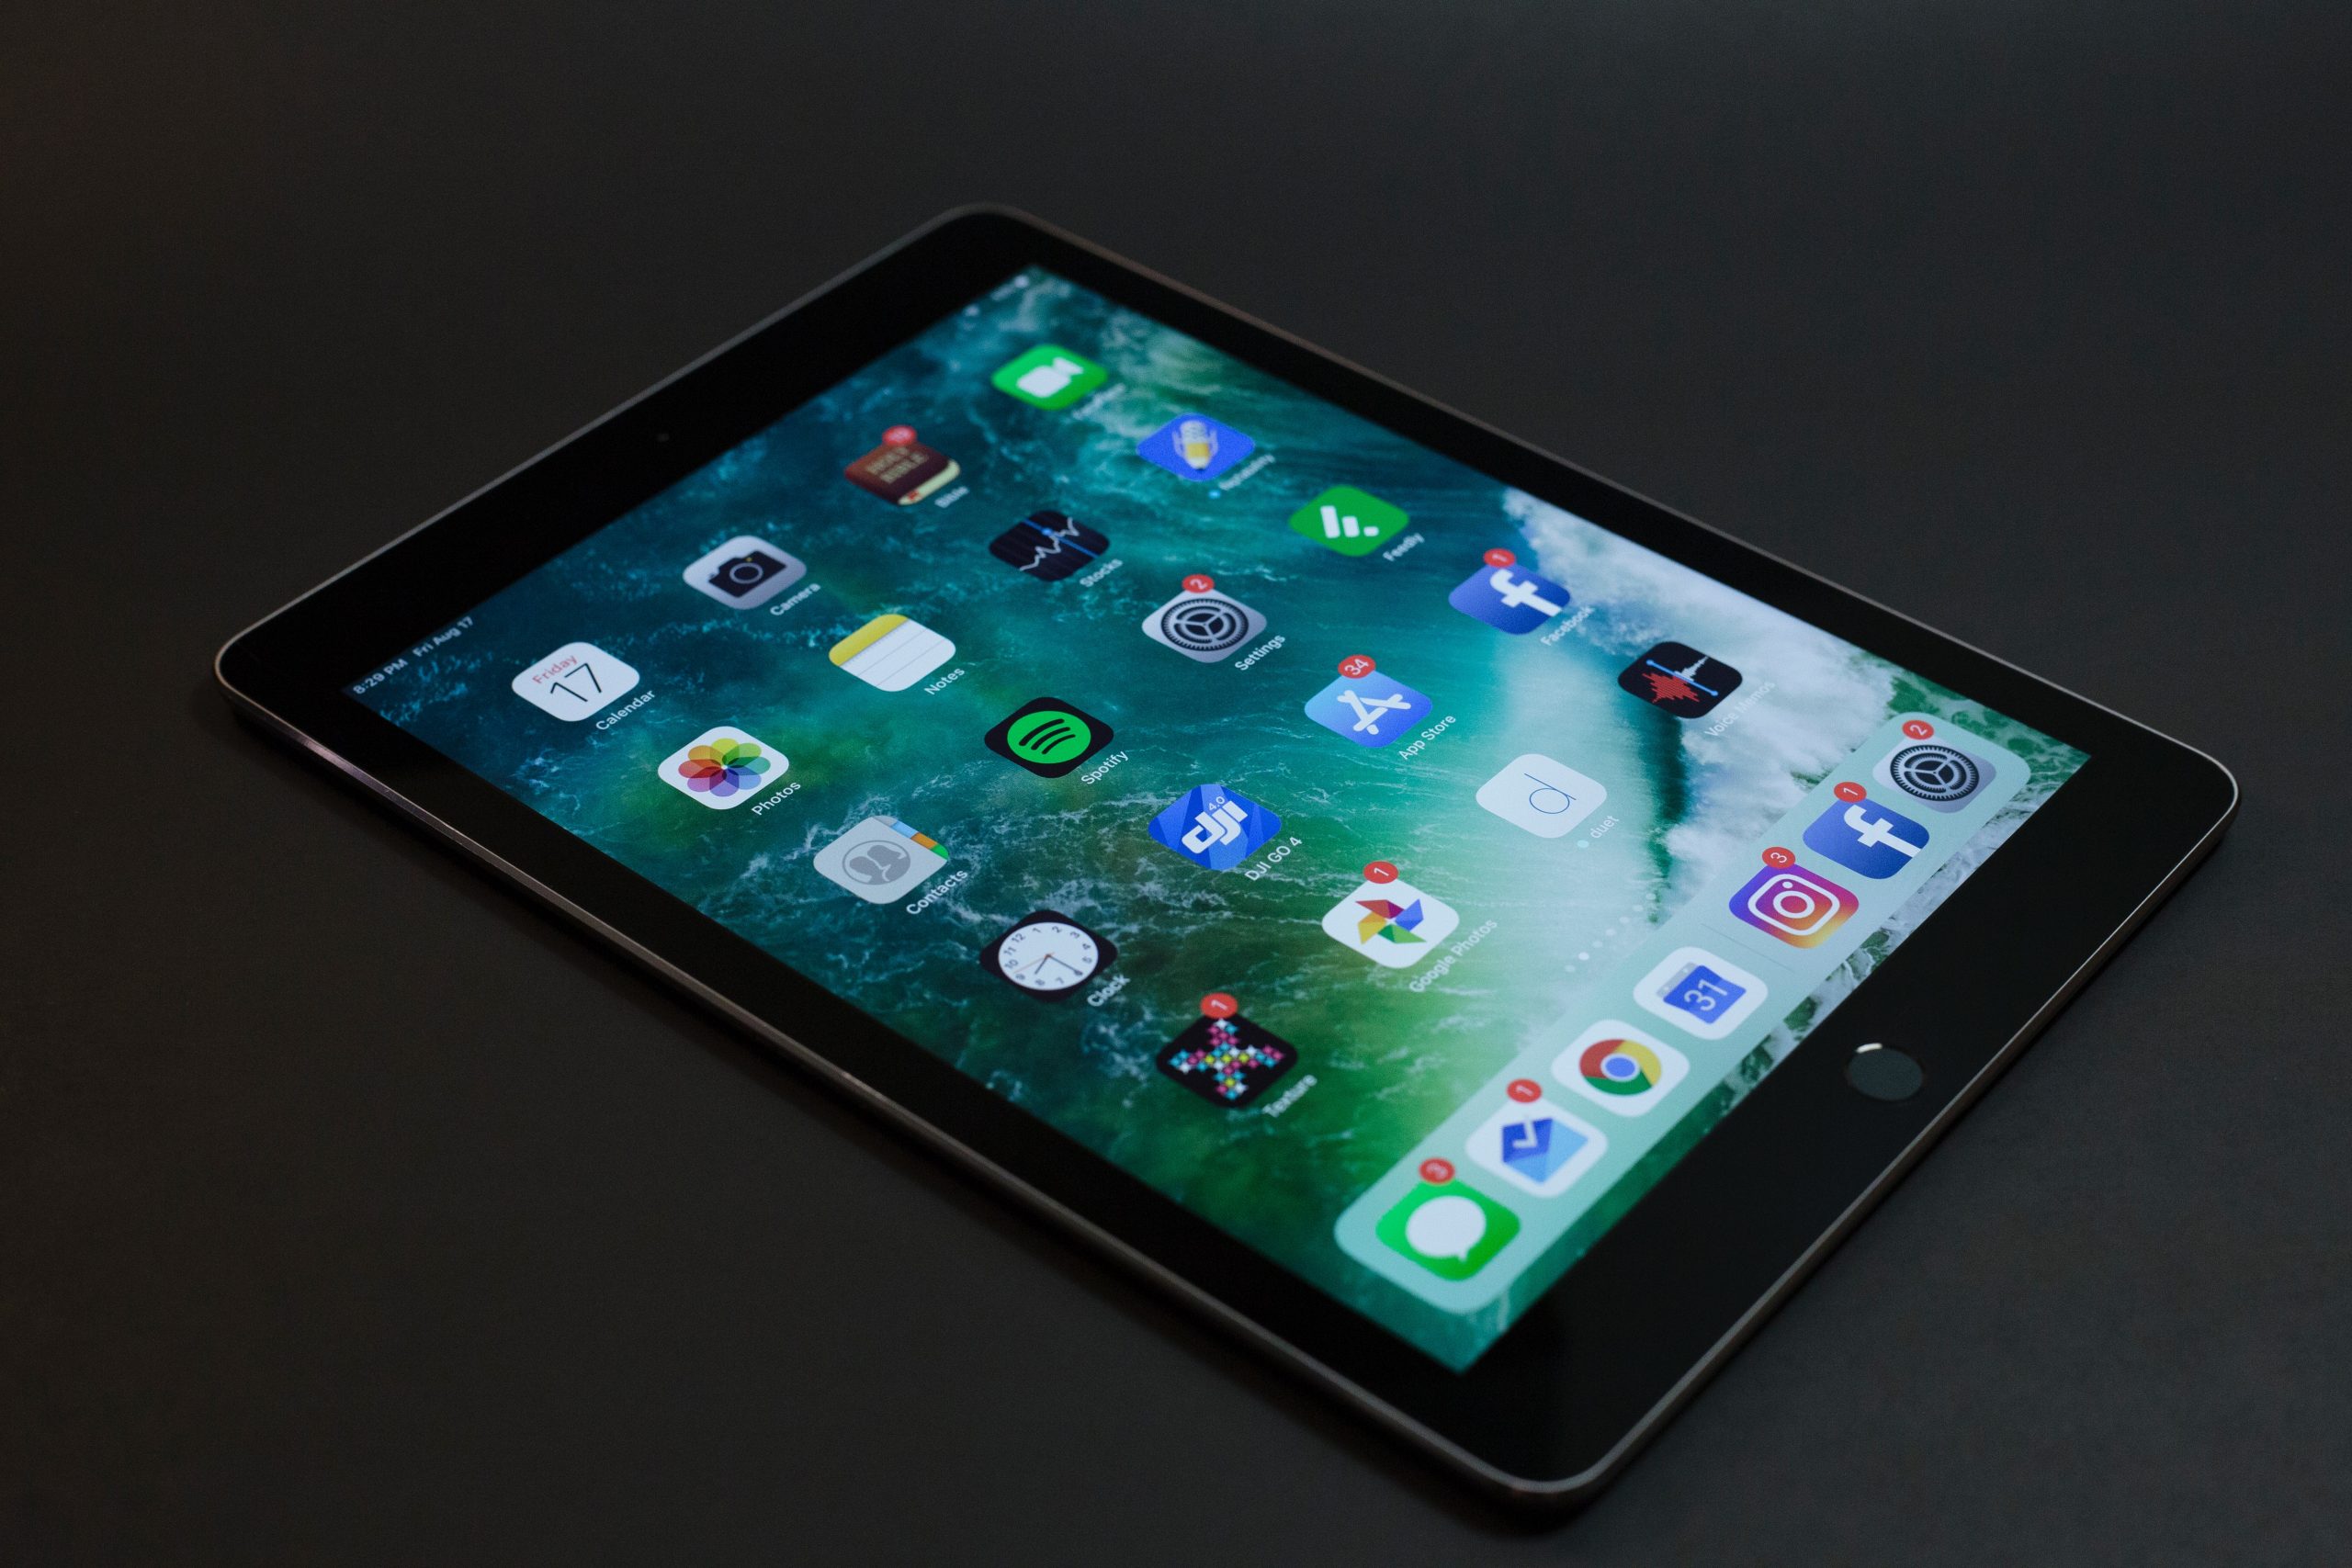 Apple iPad lineup: Which iPad should I buy?